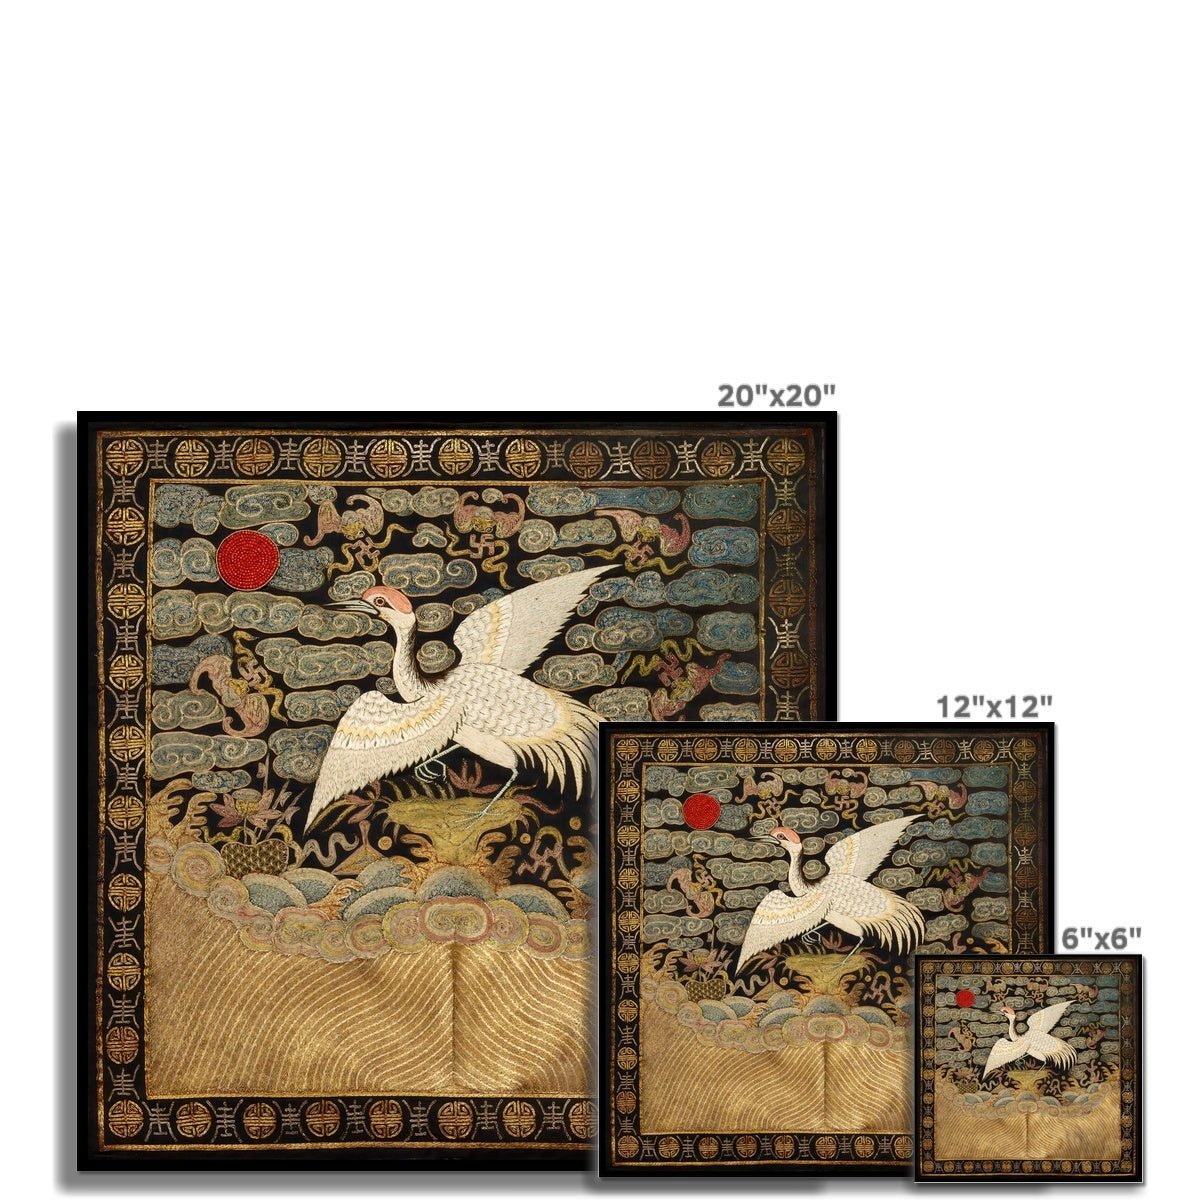 giclee 6"x6" Chinese Silk Embroidery Heron Bird Mandarin Square Qing Dynasty, Antique Wall Art Decor Vintage Fine Art Print